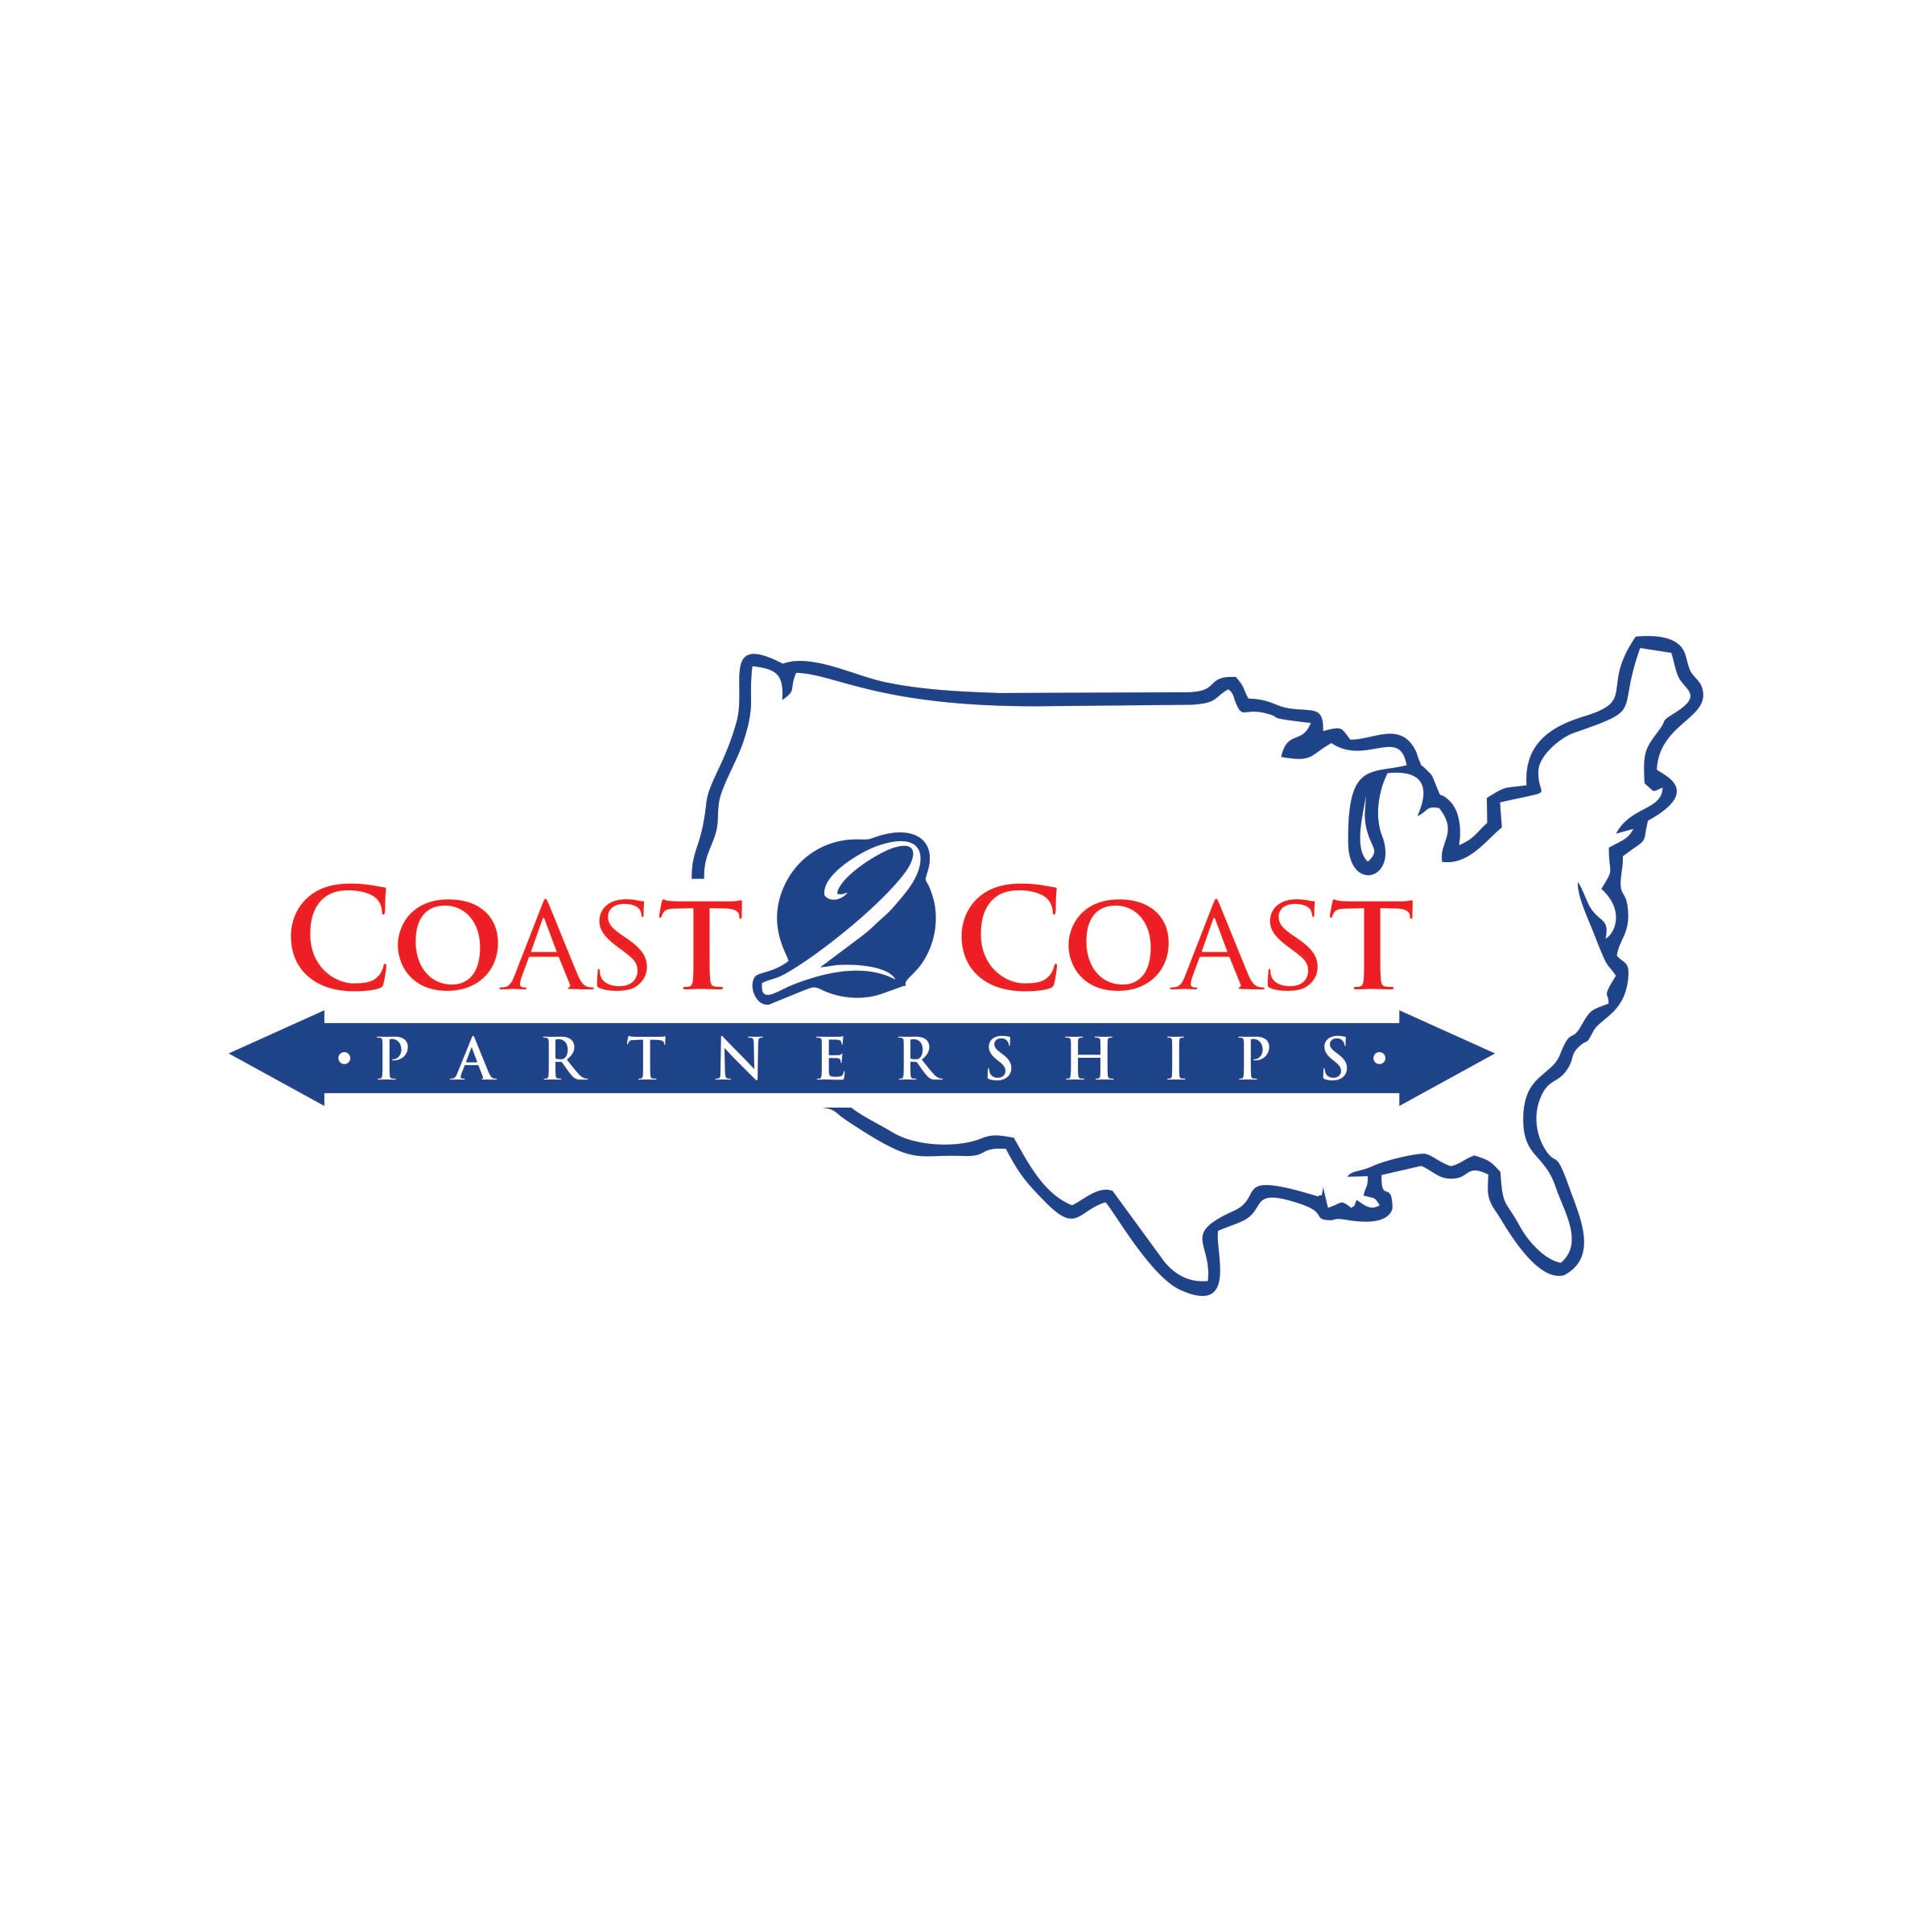 Coast 2 Coast Partnerships LLC